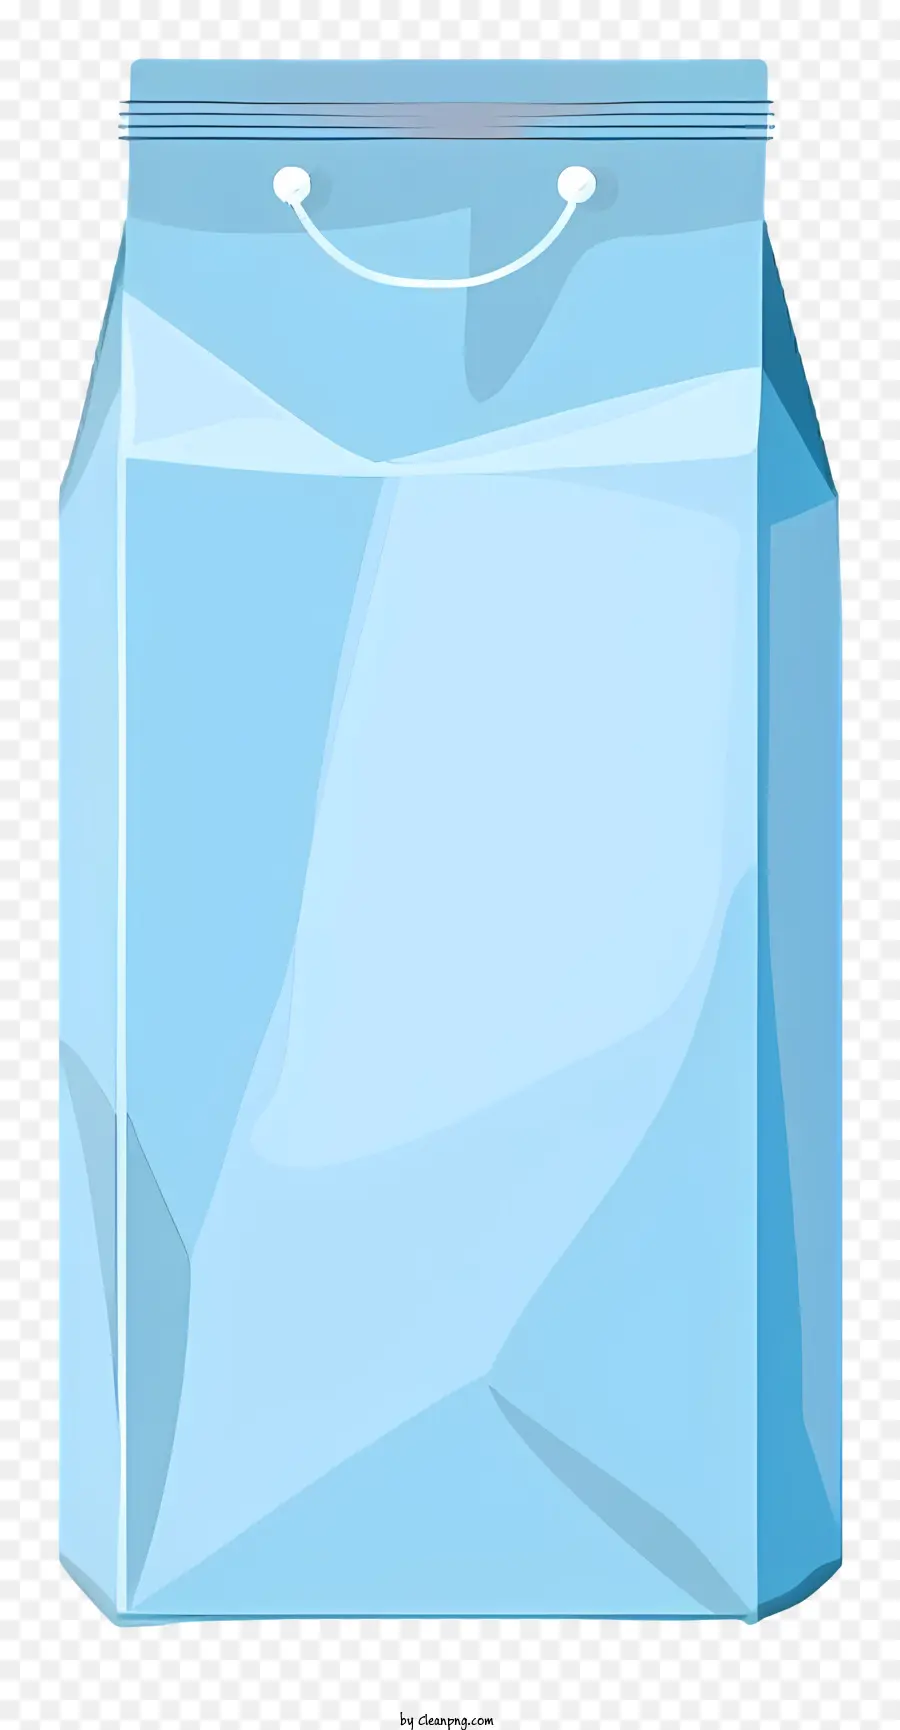 milk tetra pack blue plastic bag drawstring handle made in japan transparent bag